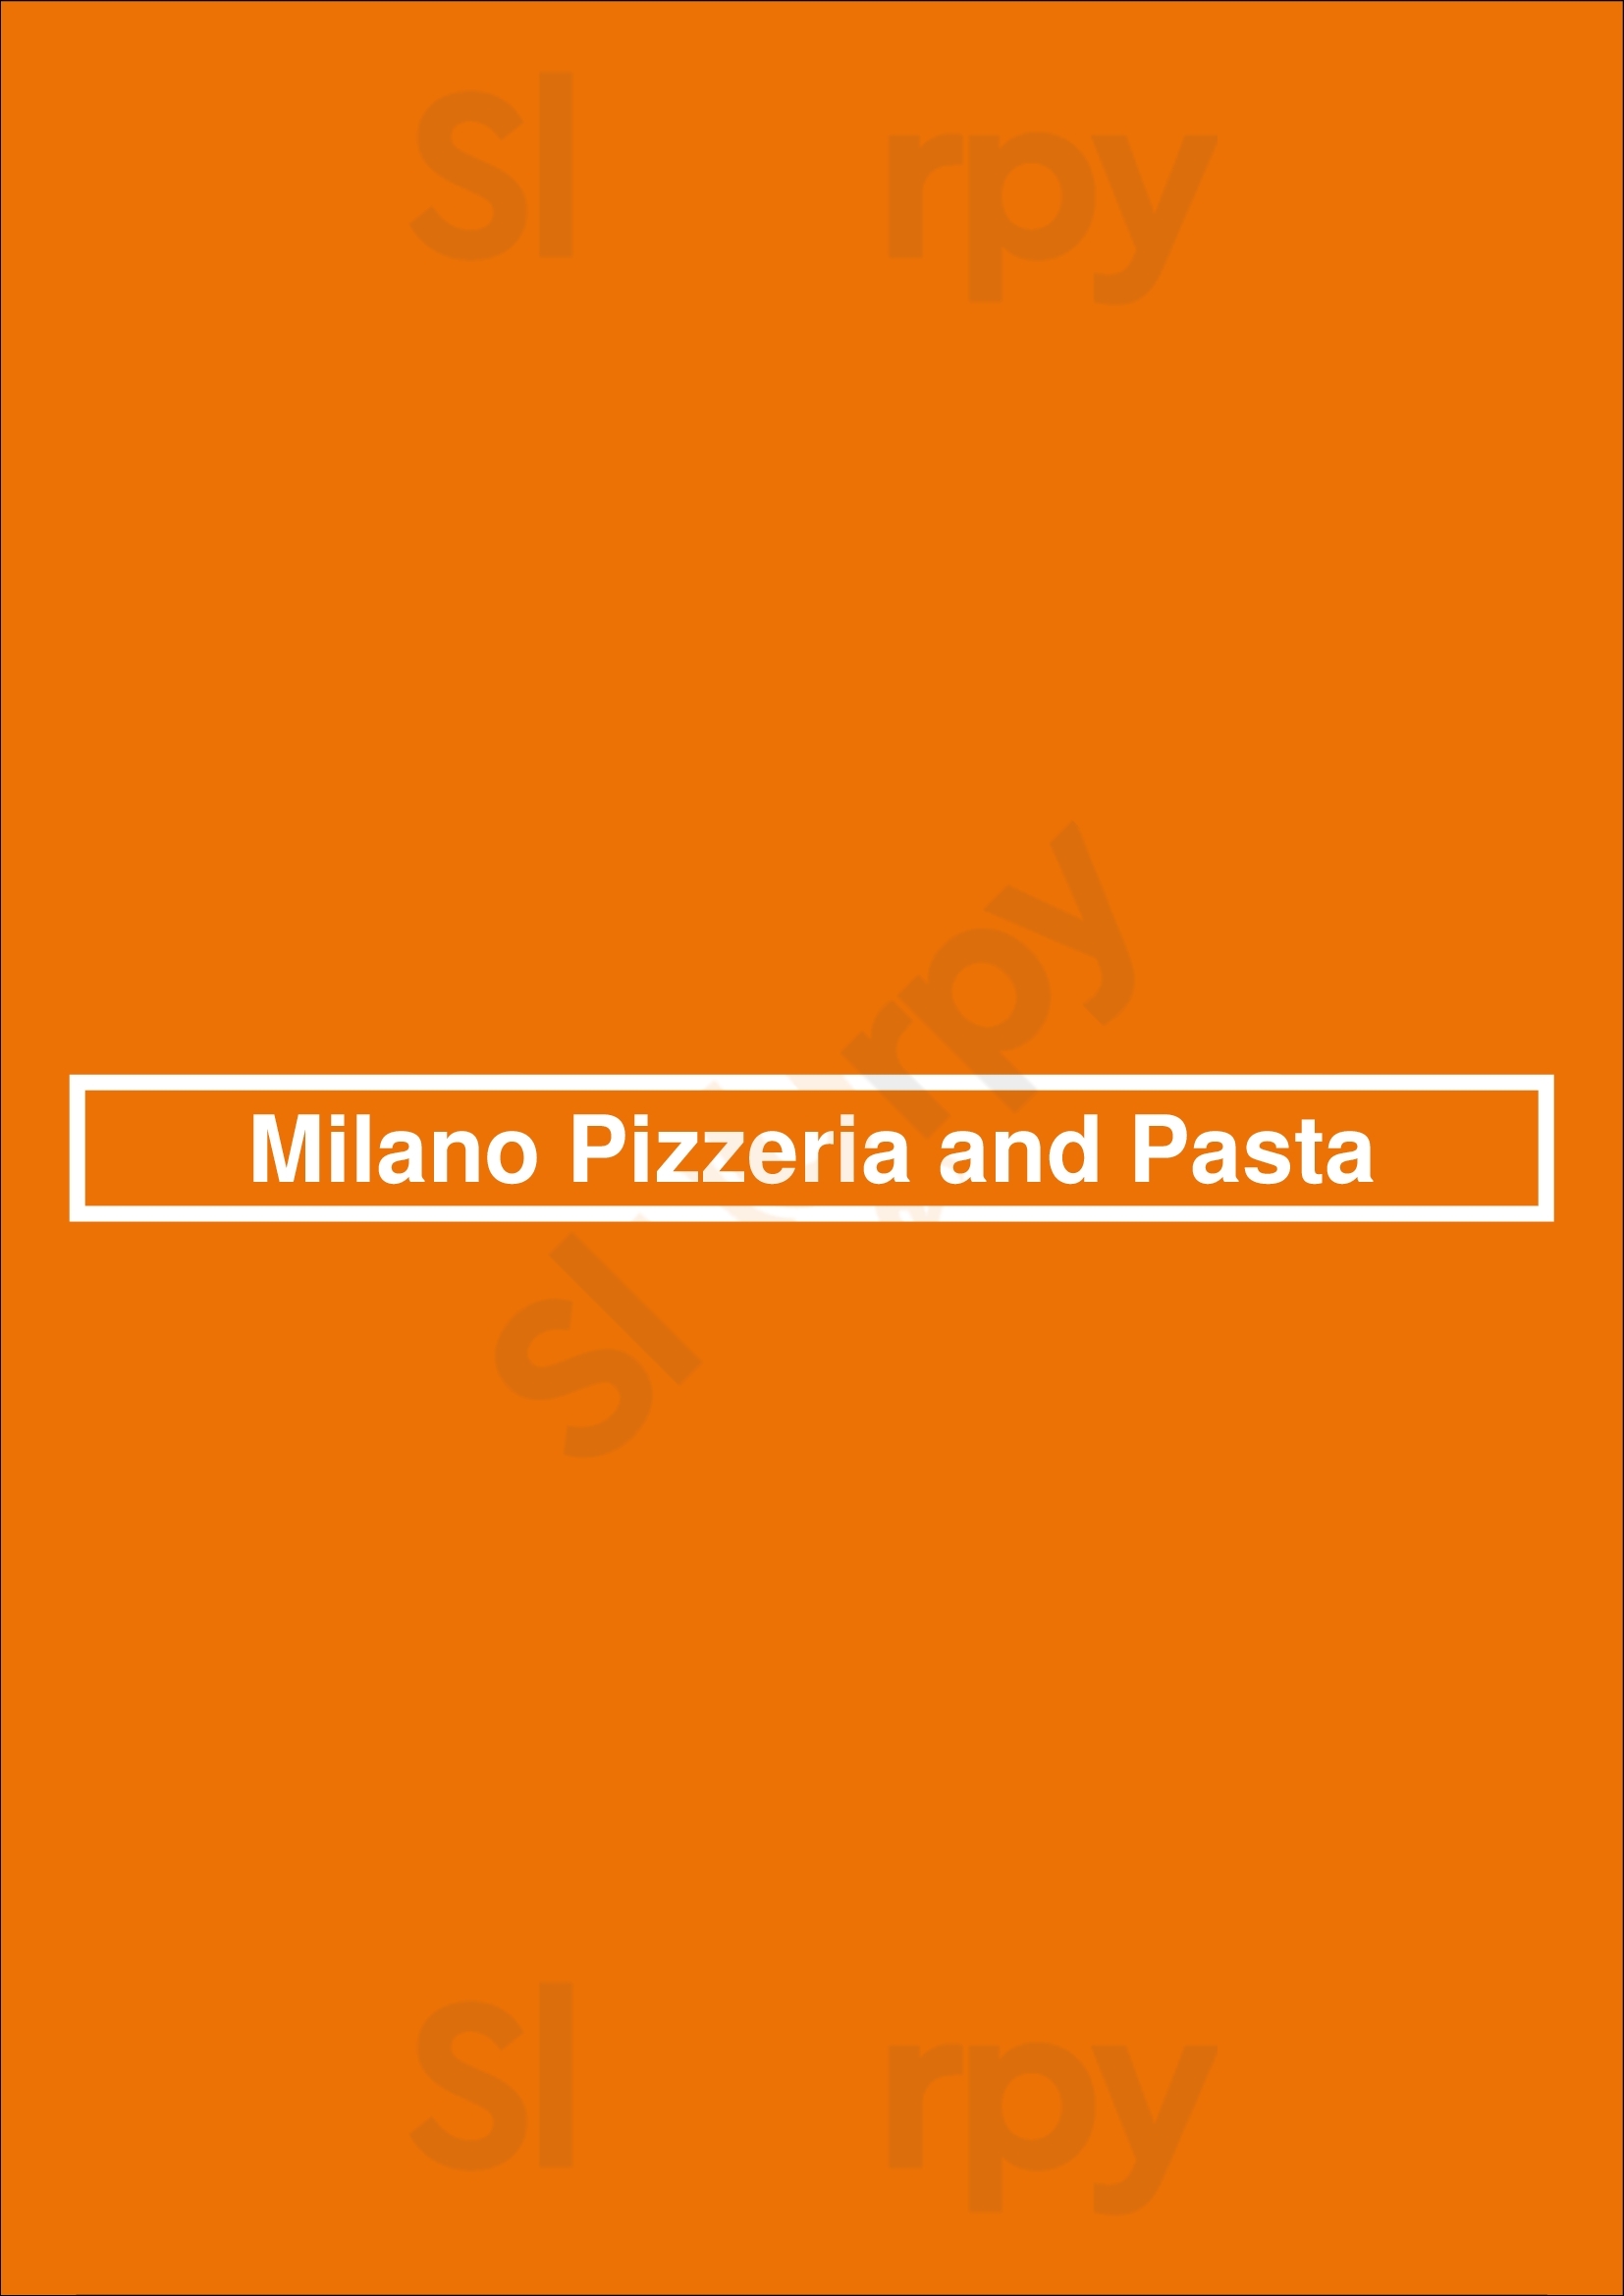 Milano Pizzeria And Pasta Boston Menu - 1